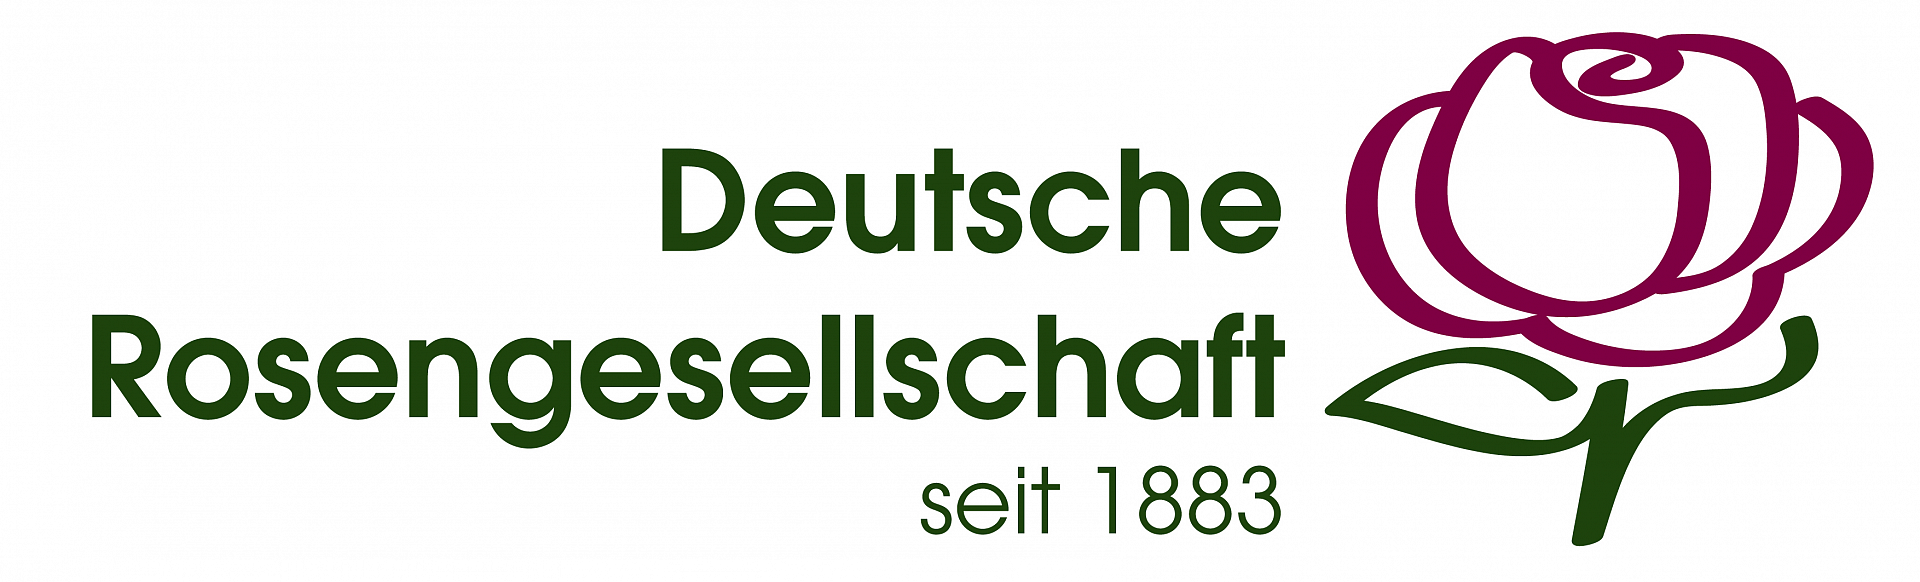 DeutscheRosengesellschaft Logo RGB neu